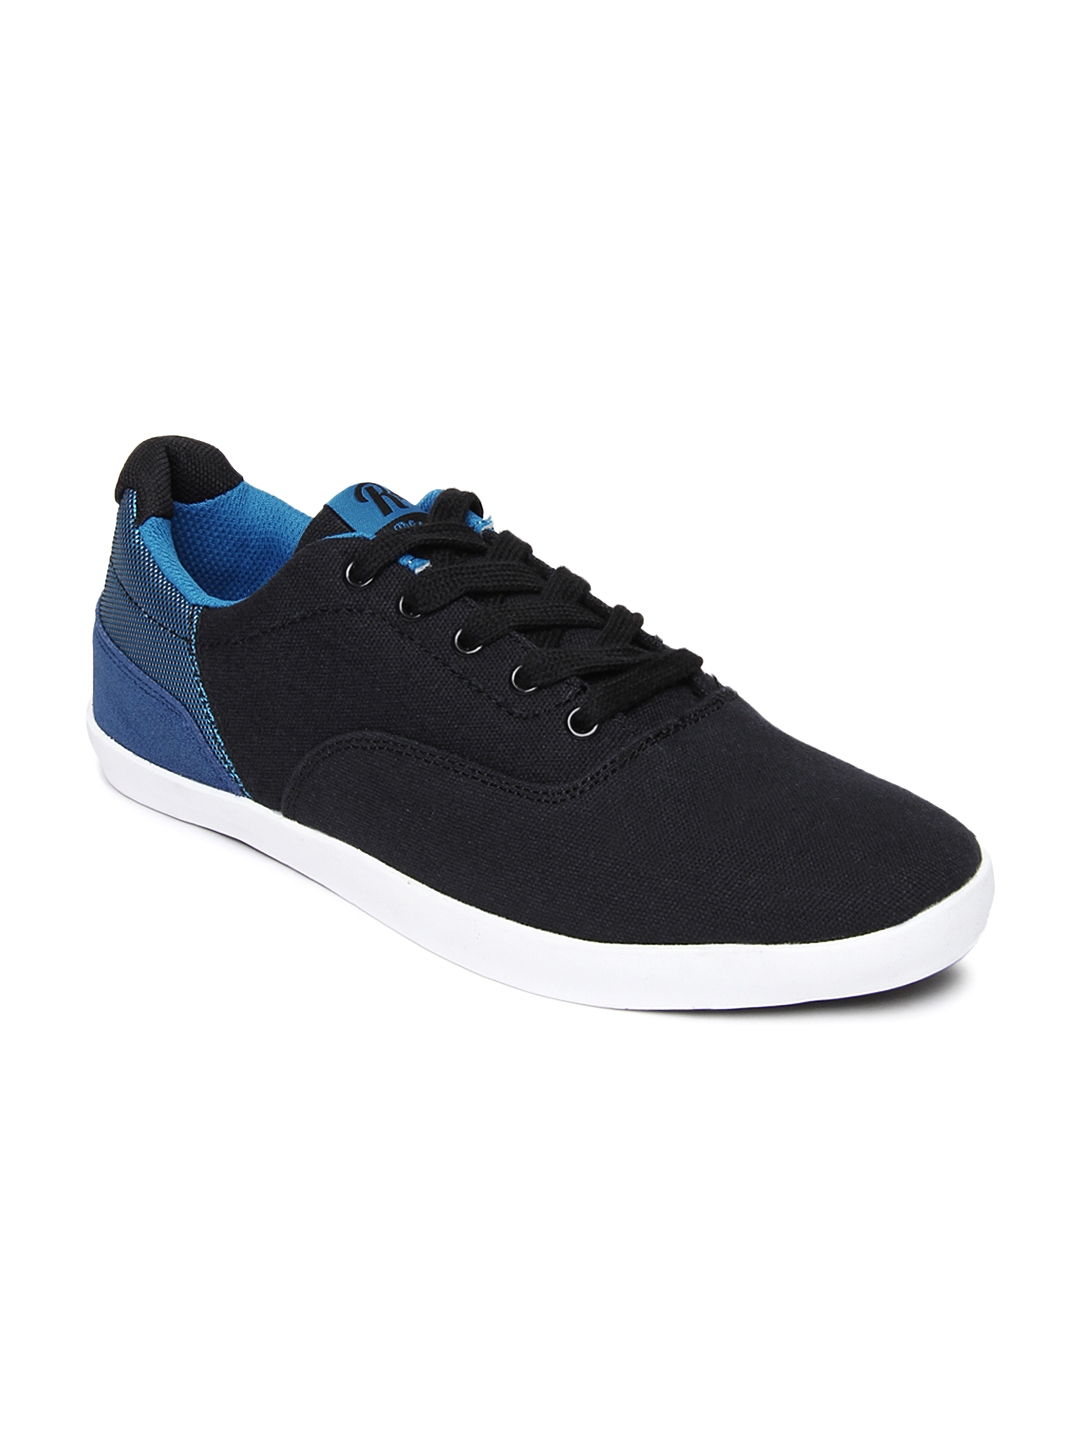 Buy Roadster Men Black & Blue Casual Shoes - Casual Shoes for Men ...